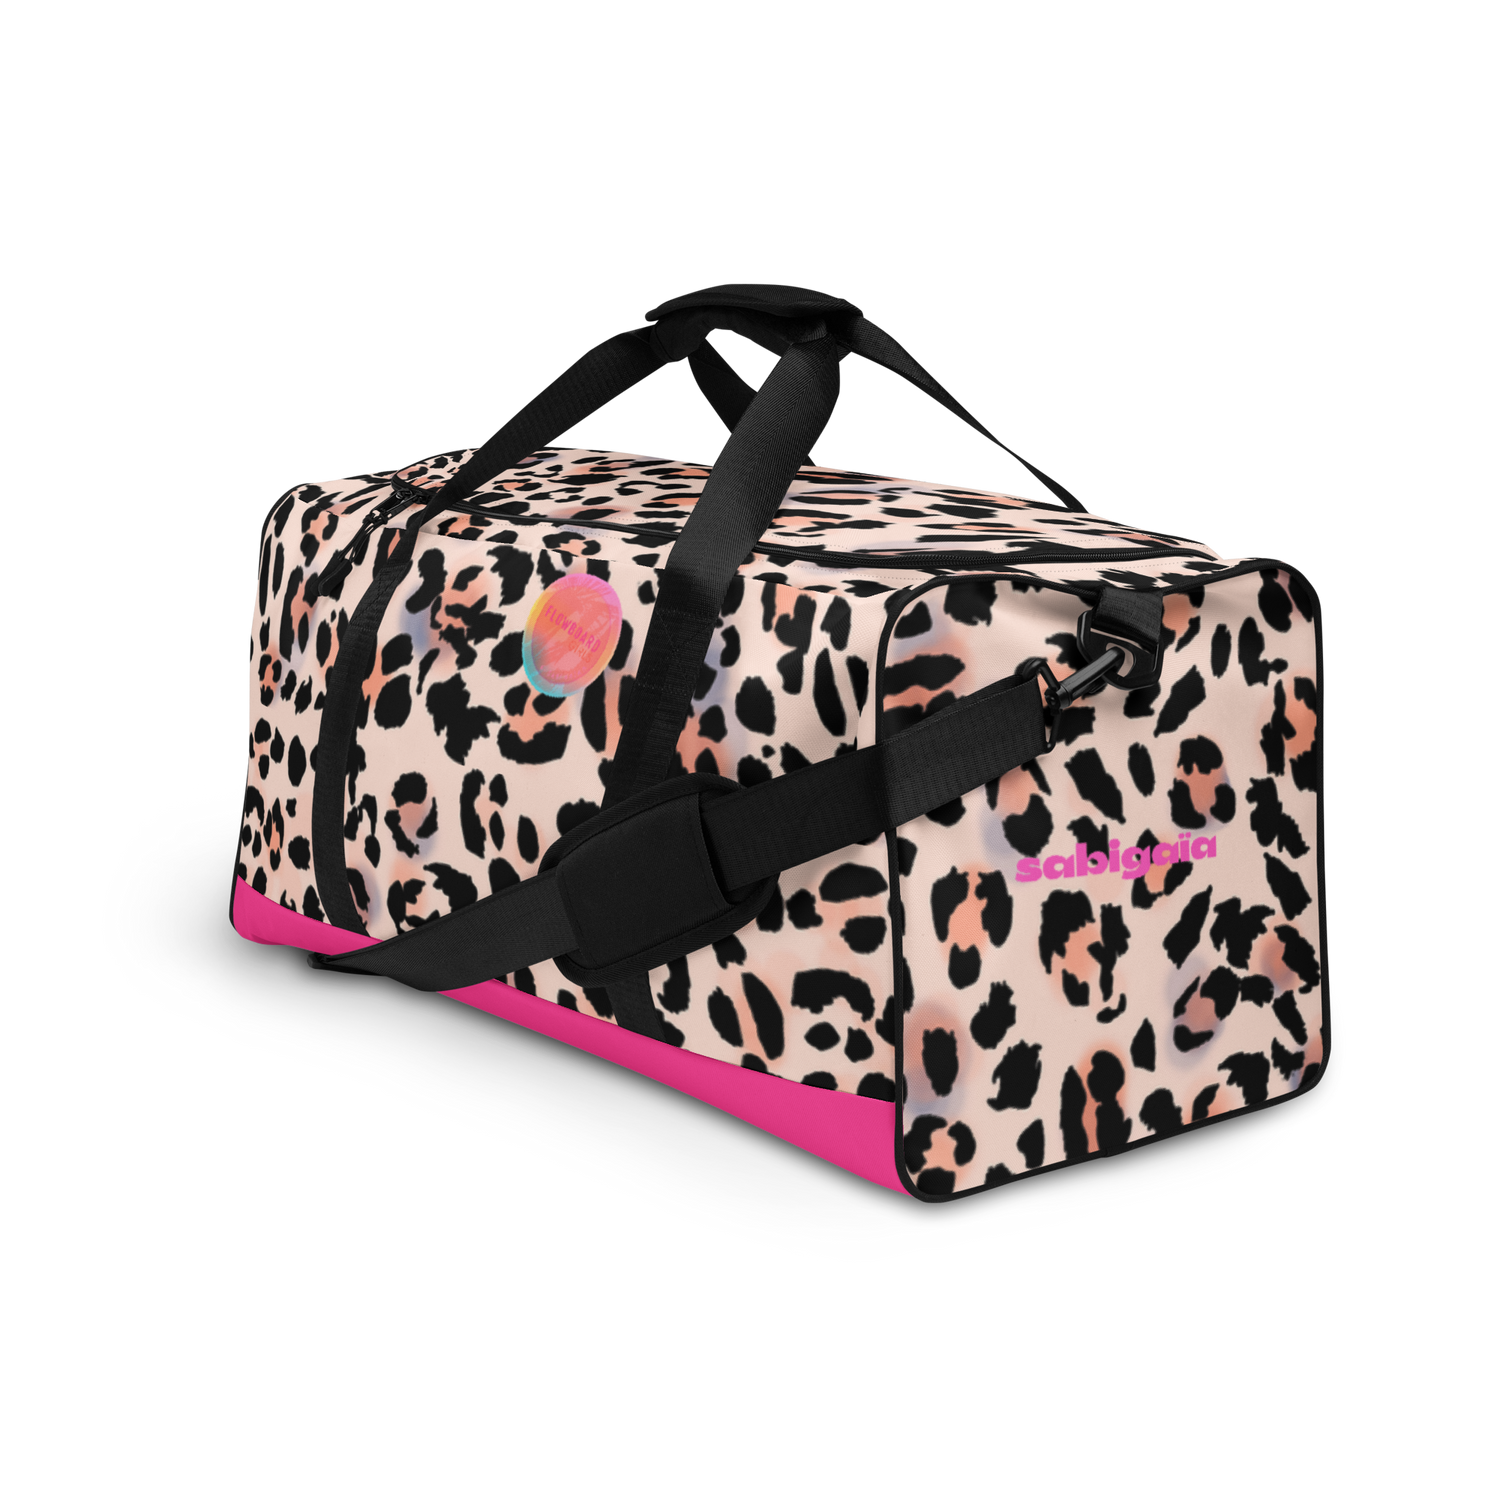 FLOWBOARD GIRLS Duffle bag in Cheetah